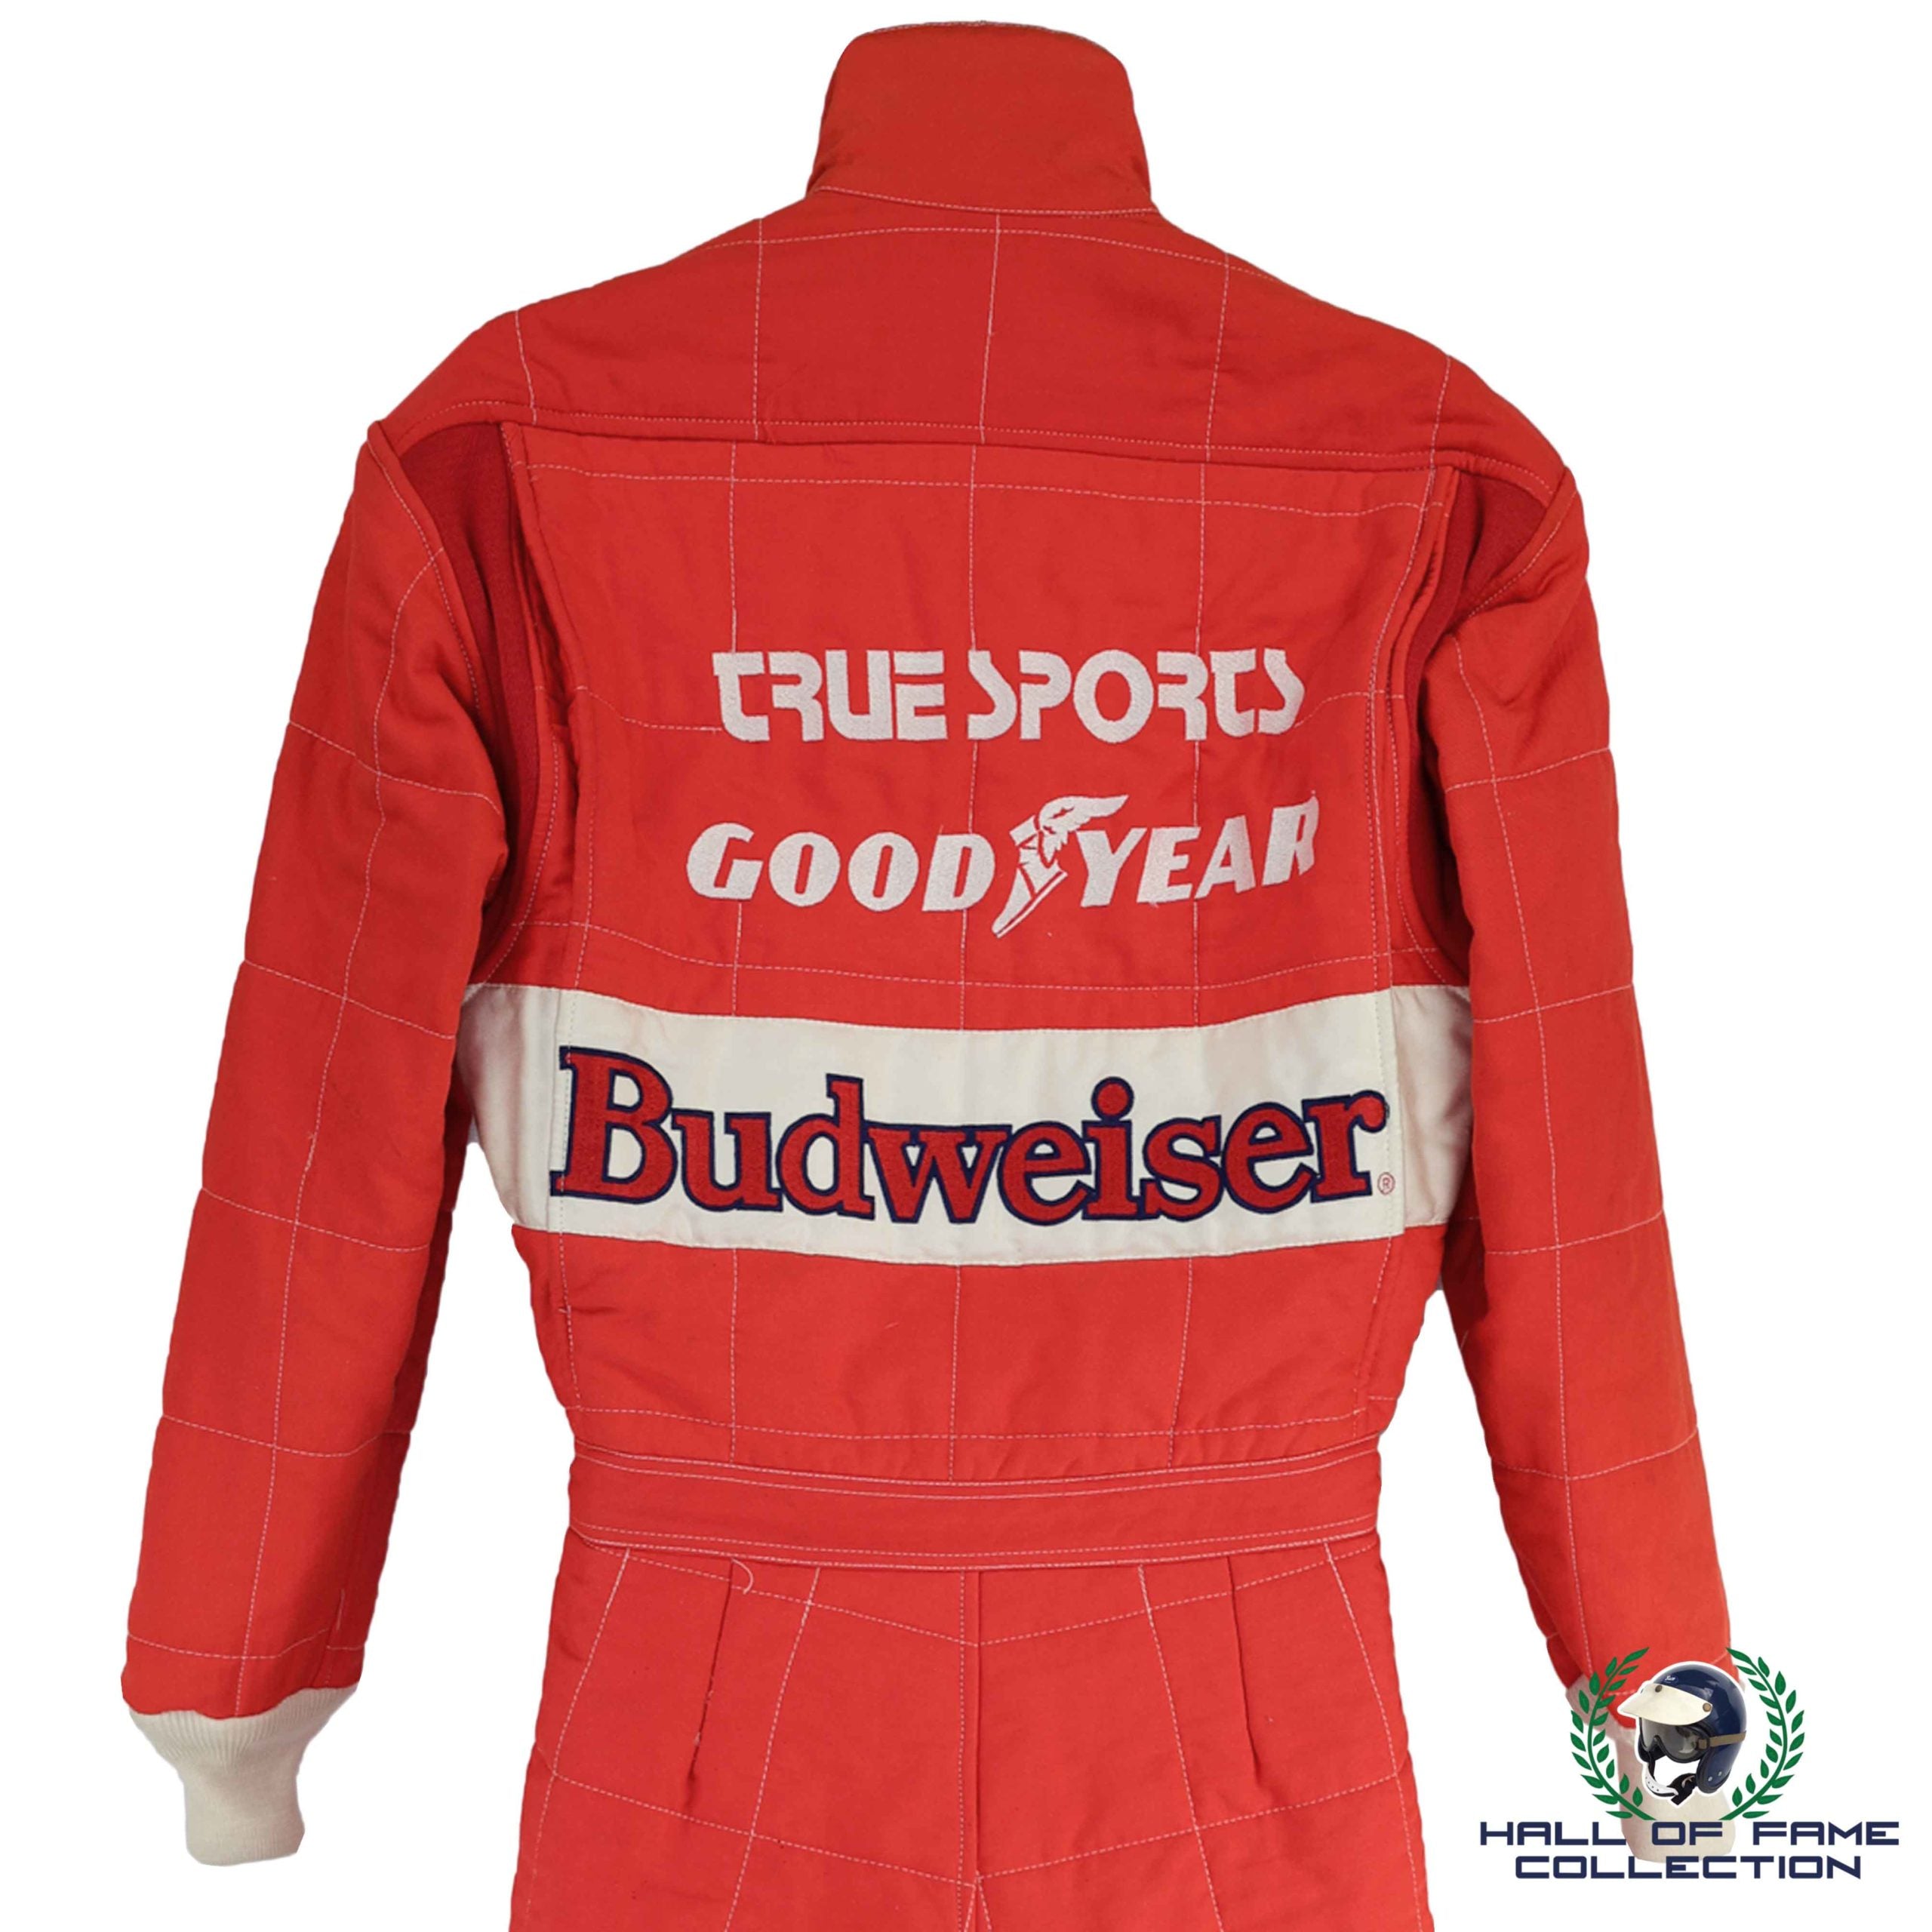 1991 Scott Pruett Signed Race Used Budweiser Truesports IndyCar Suit